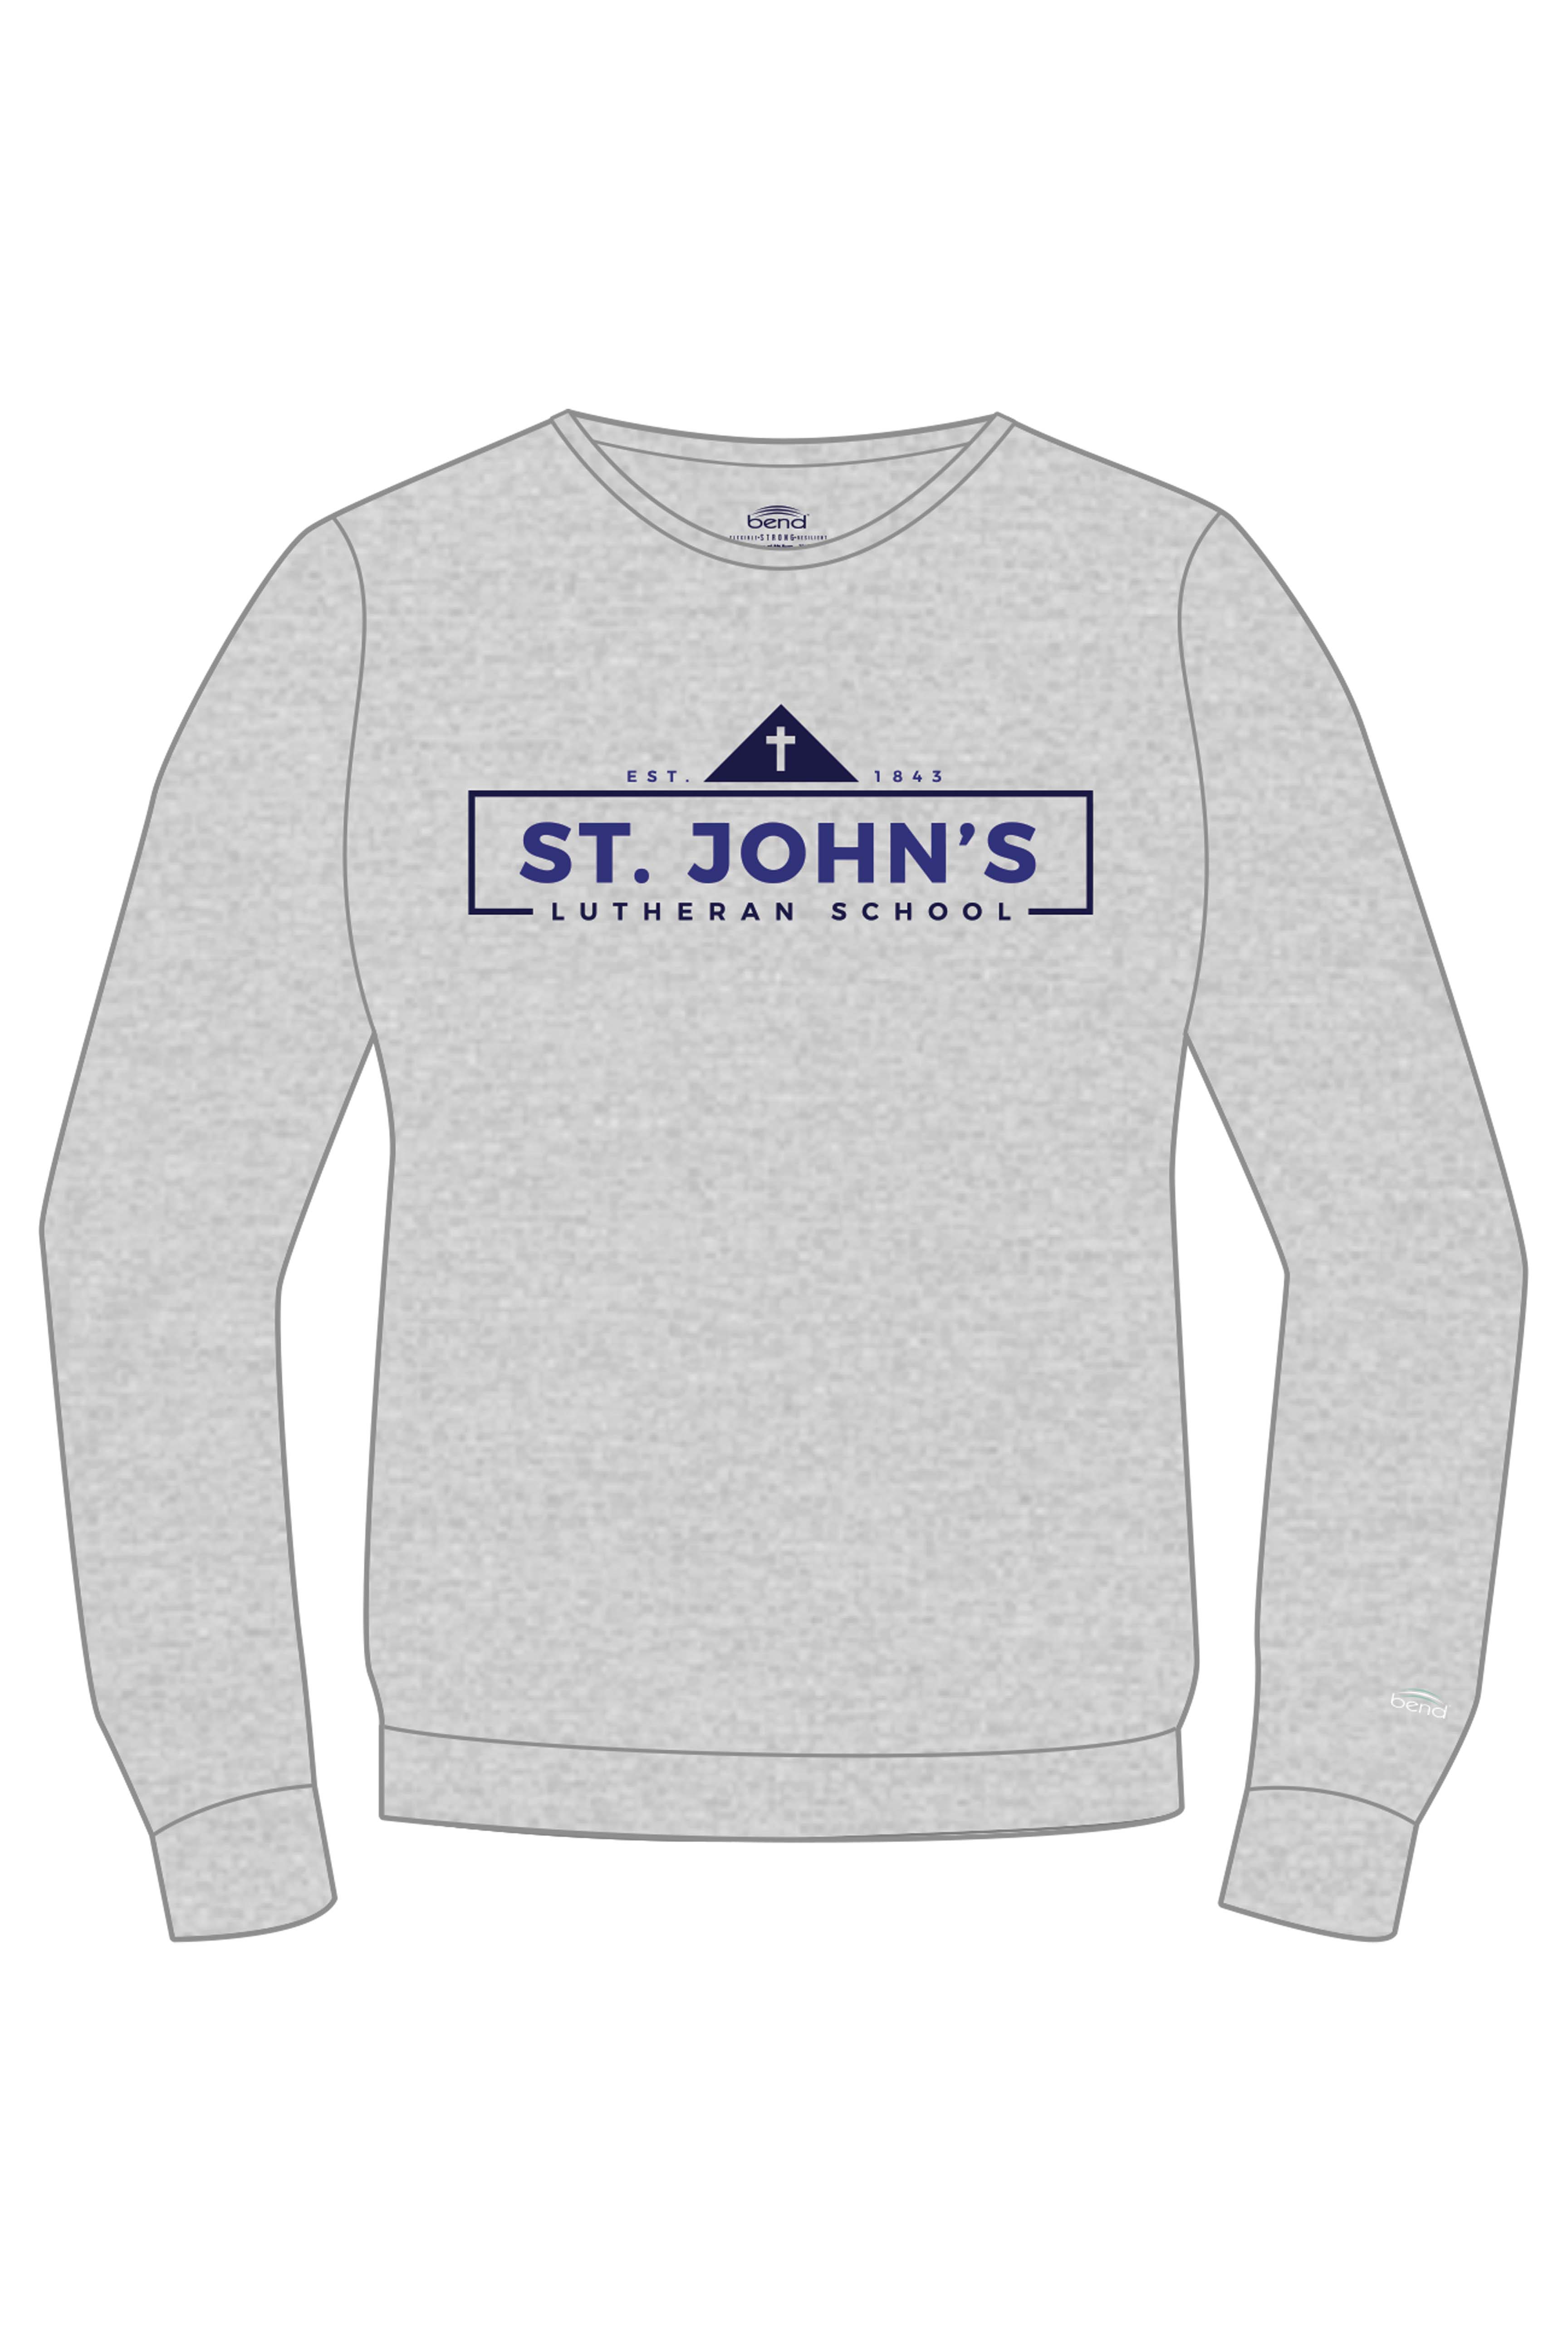 5105 - St John's Jaguars Youth Crew Neck Sweatshirt